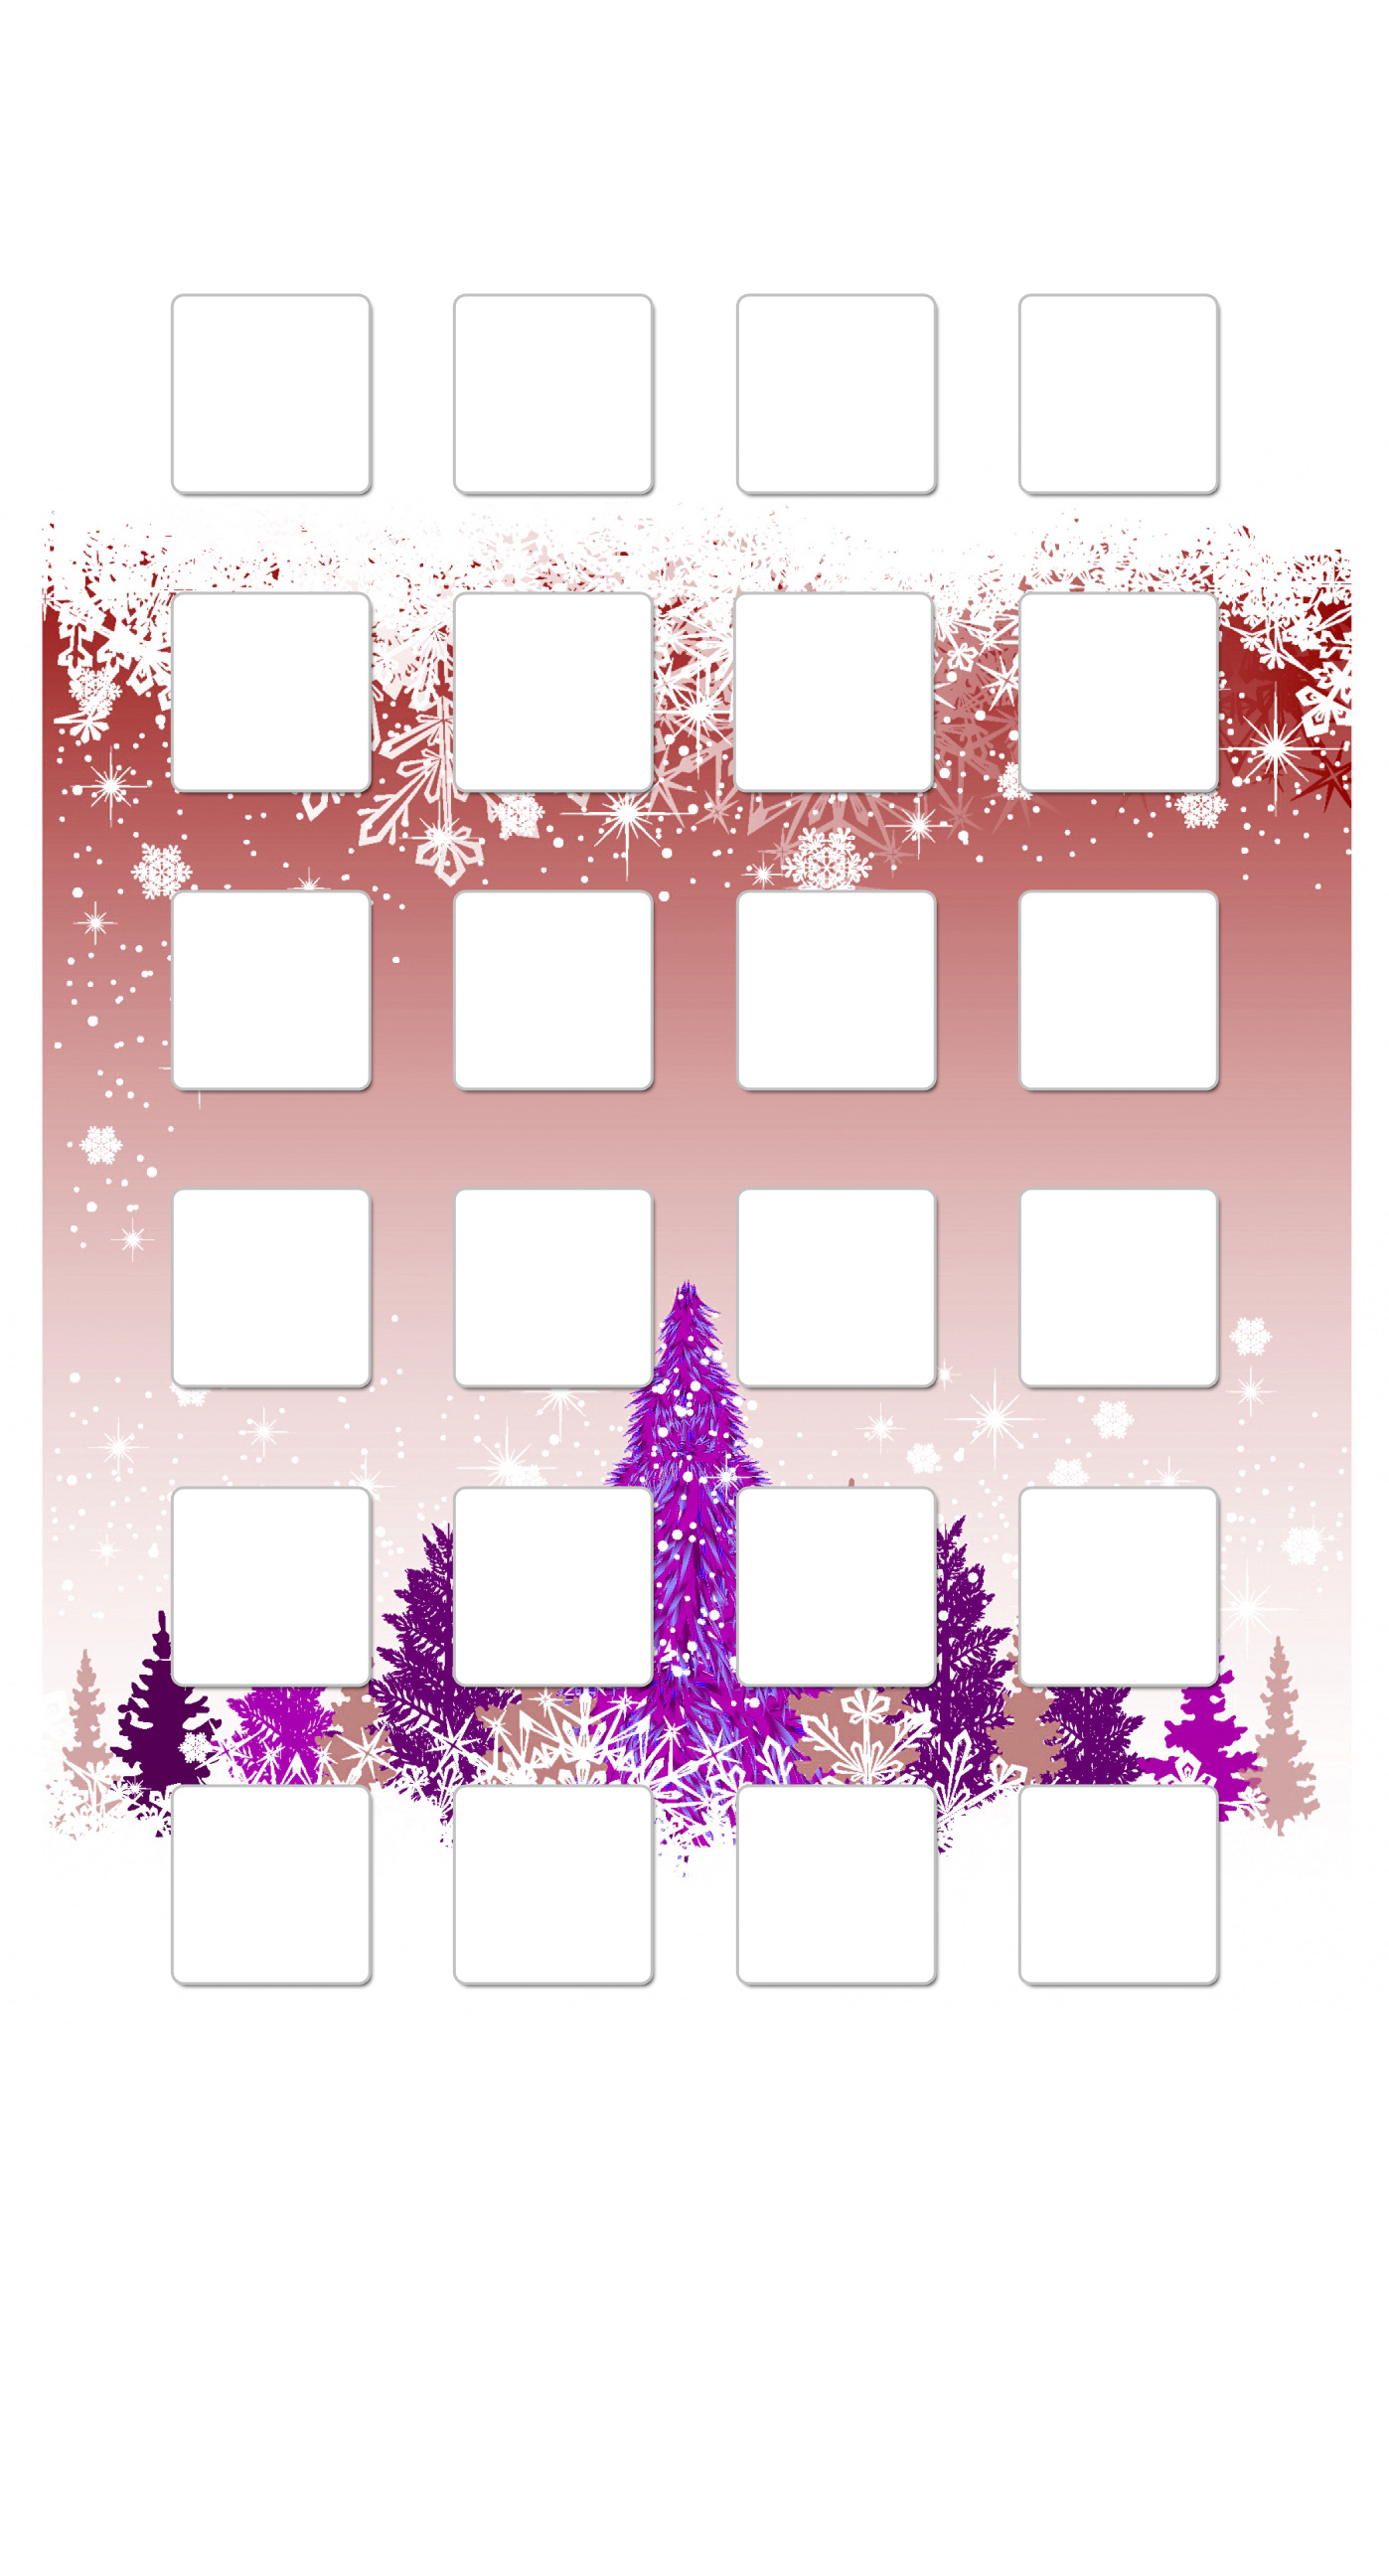 棚冬雪木赤紫可愛い女子向け Wallpaper Sc Iphone7plus壁紙